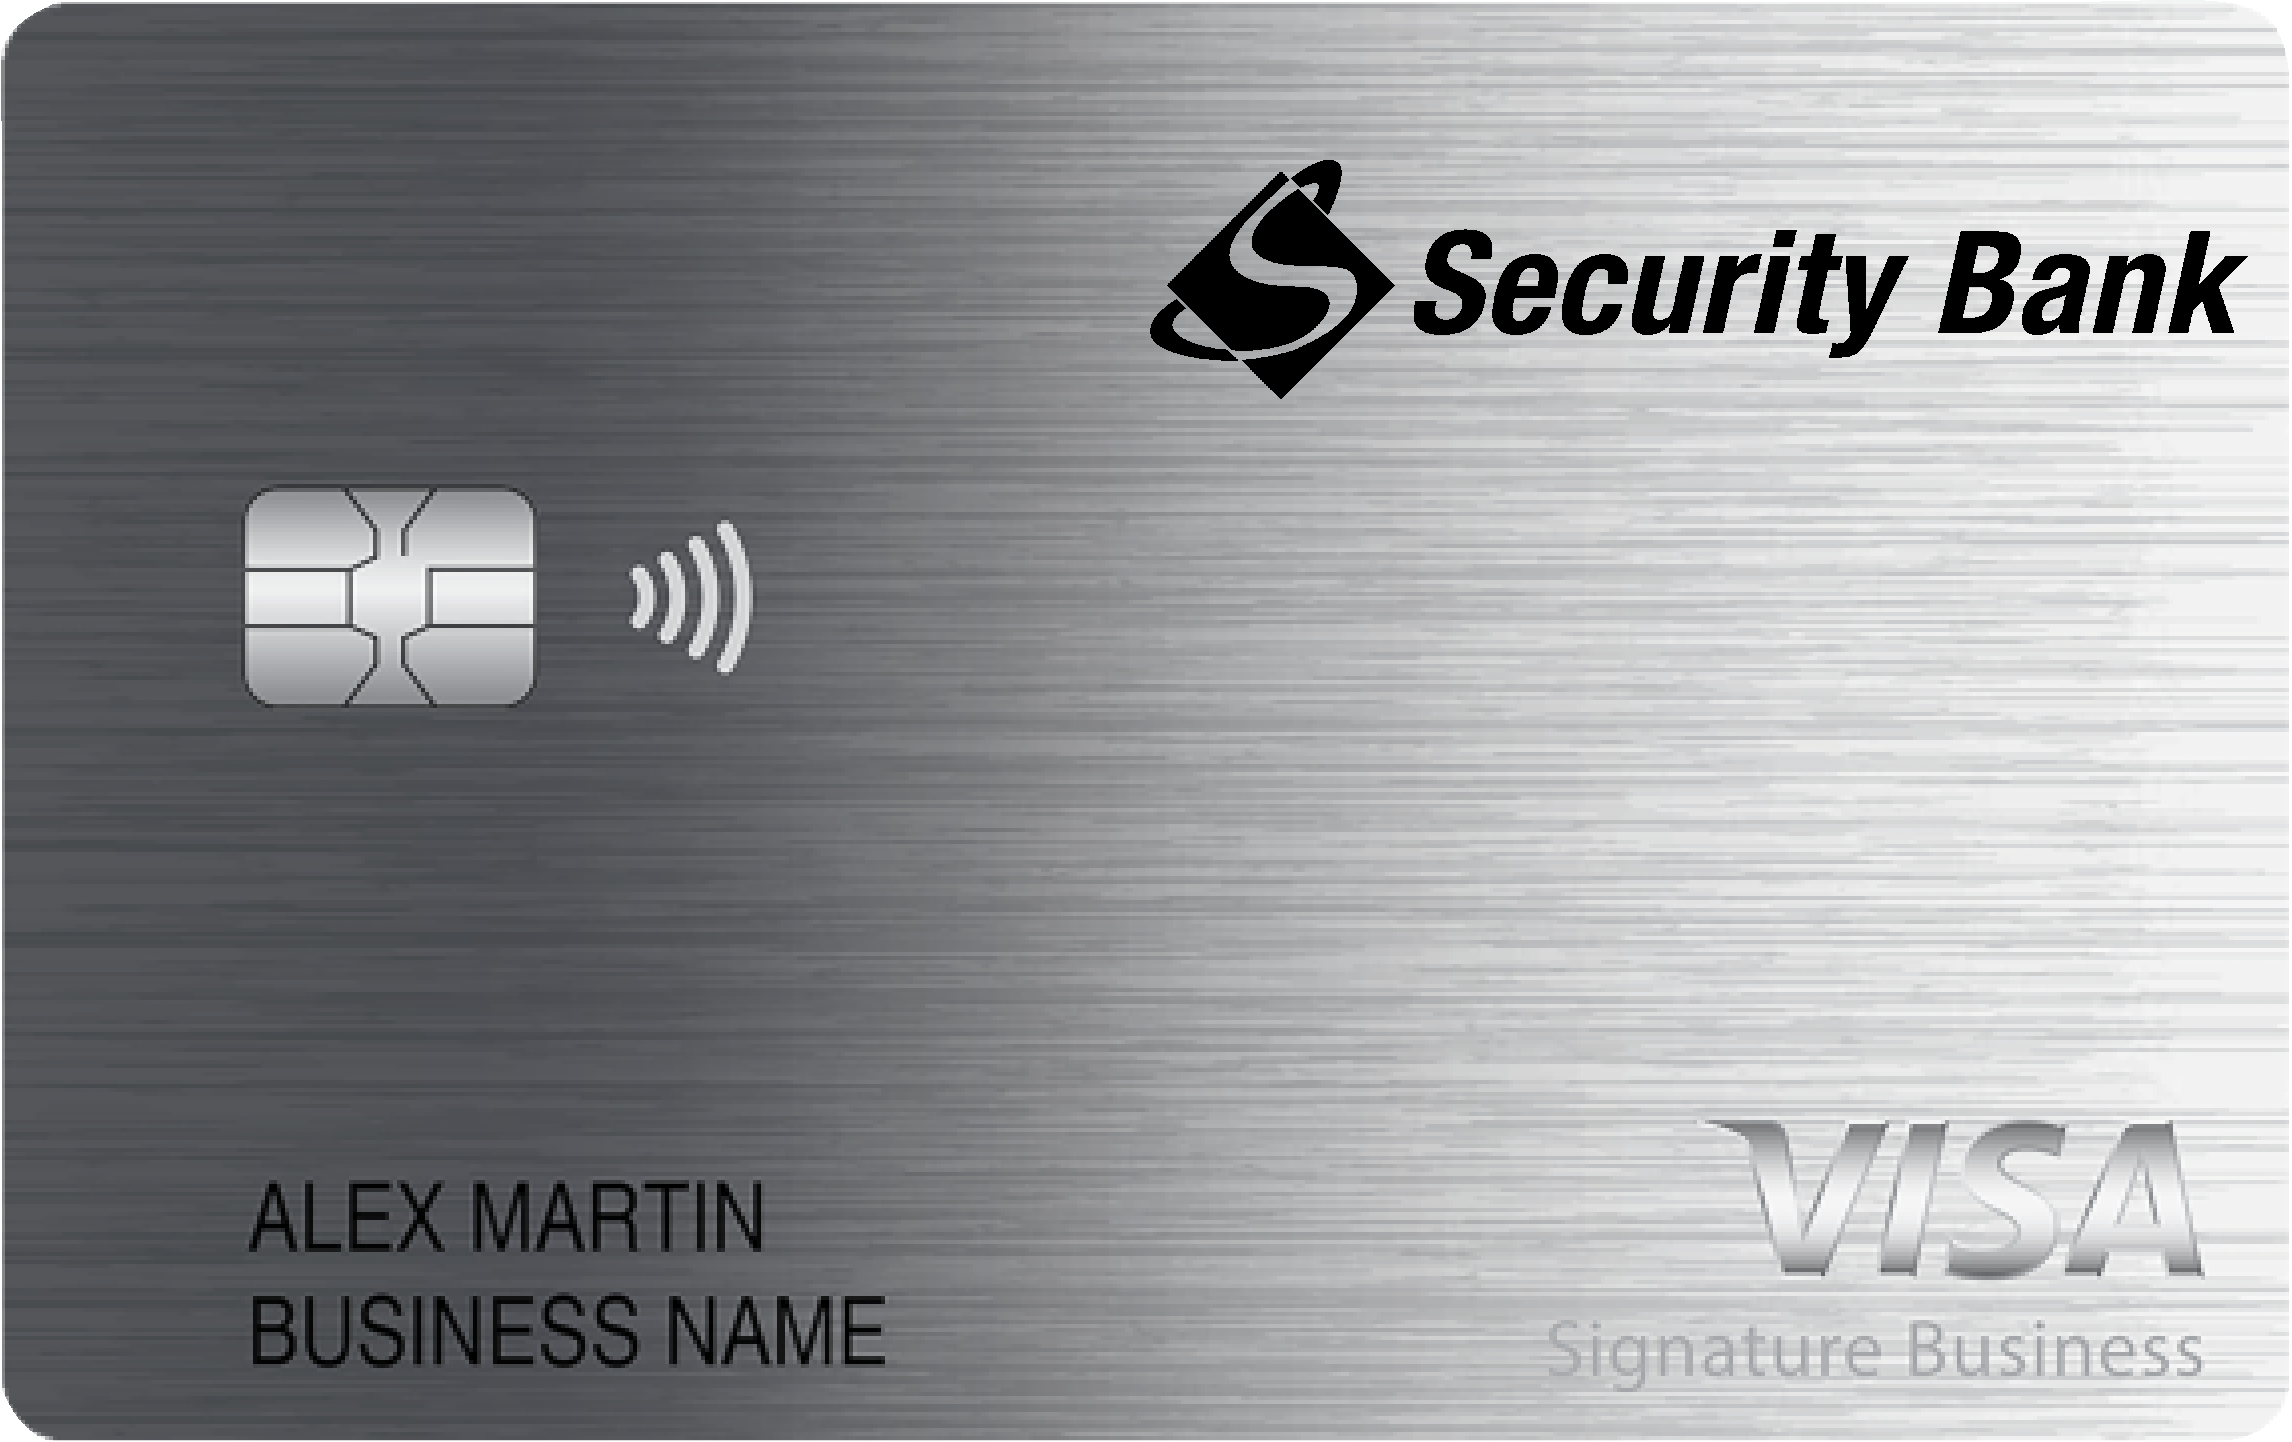 Security Bank Smart Business Rewards Card